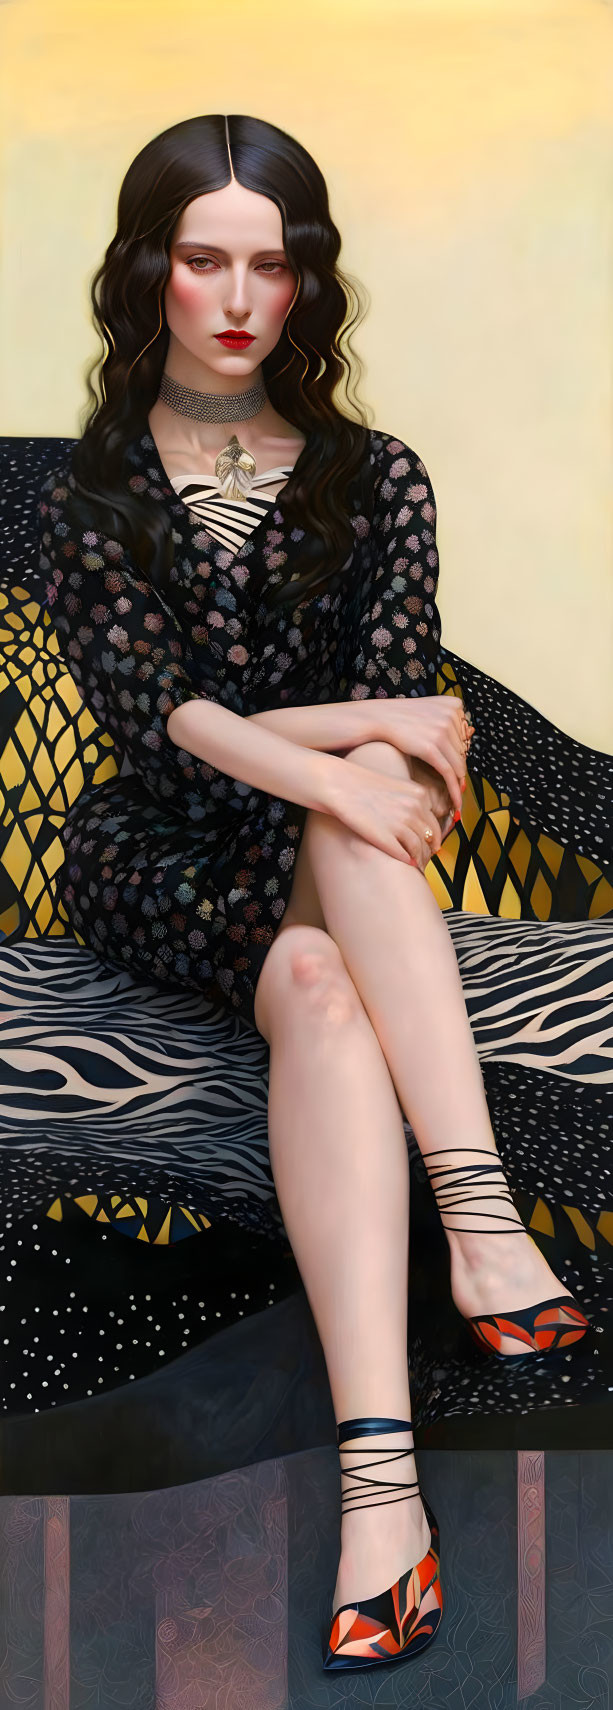 woman sitting, posing for portrait, horizontals